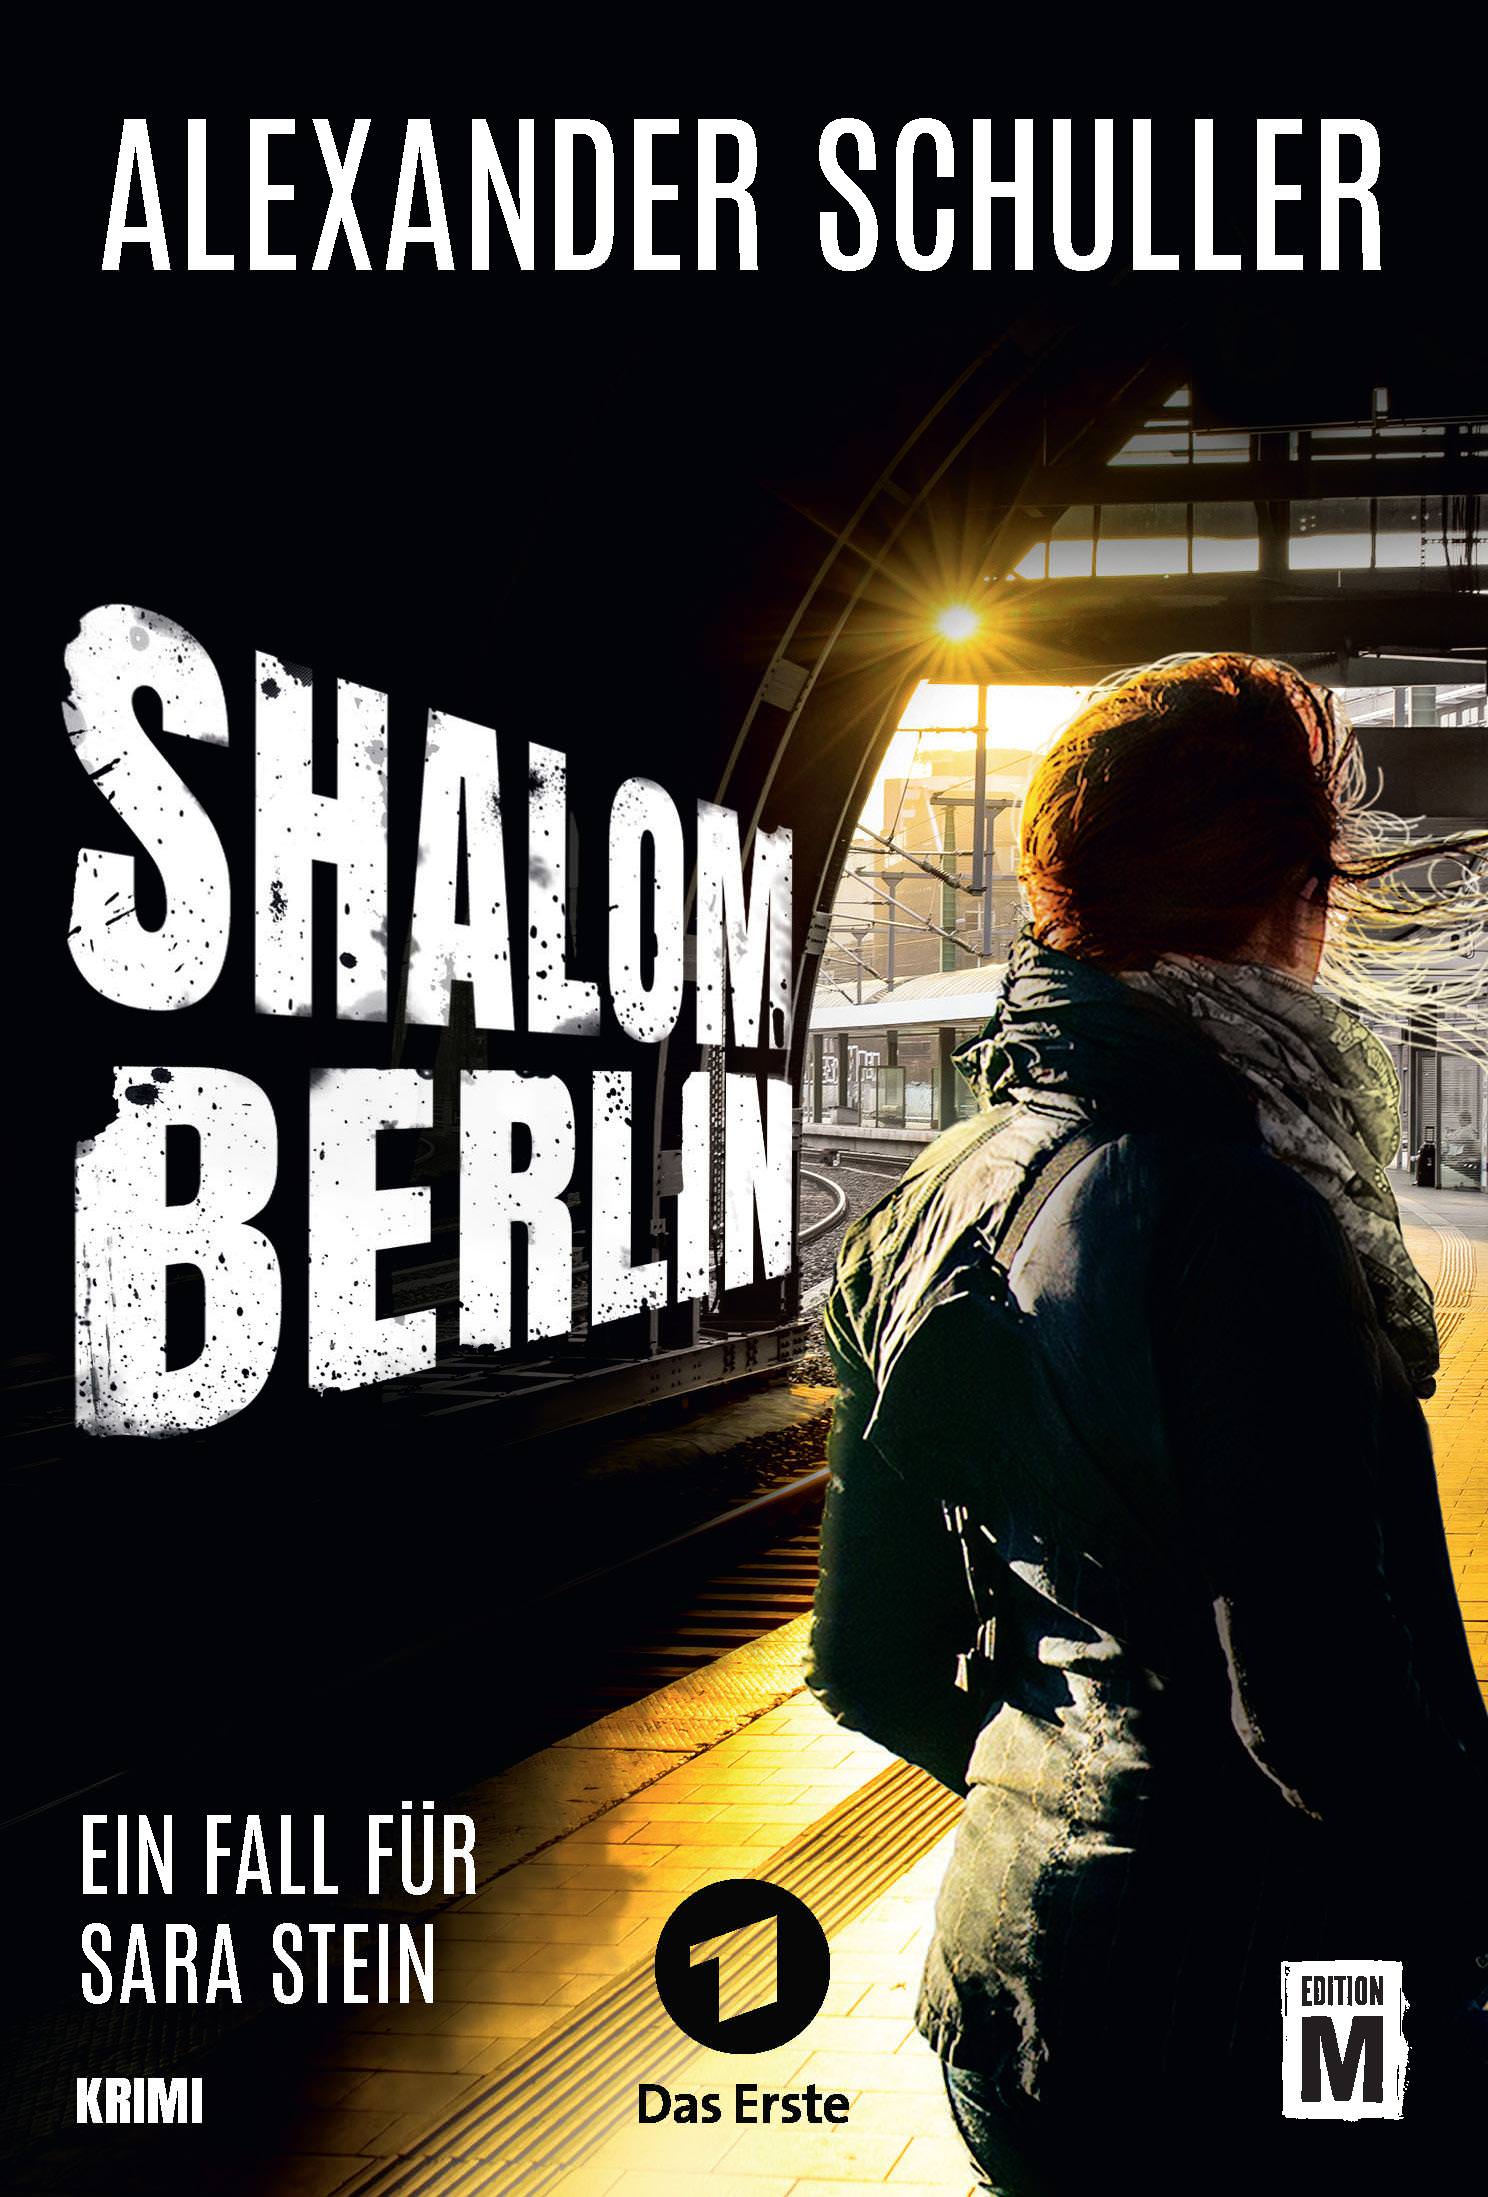 Buchcover: Alexander Schuller: Shalom Berlin. Edition M